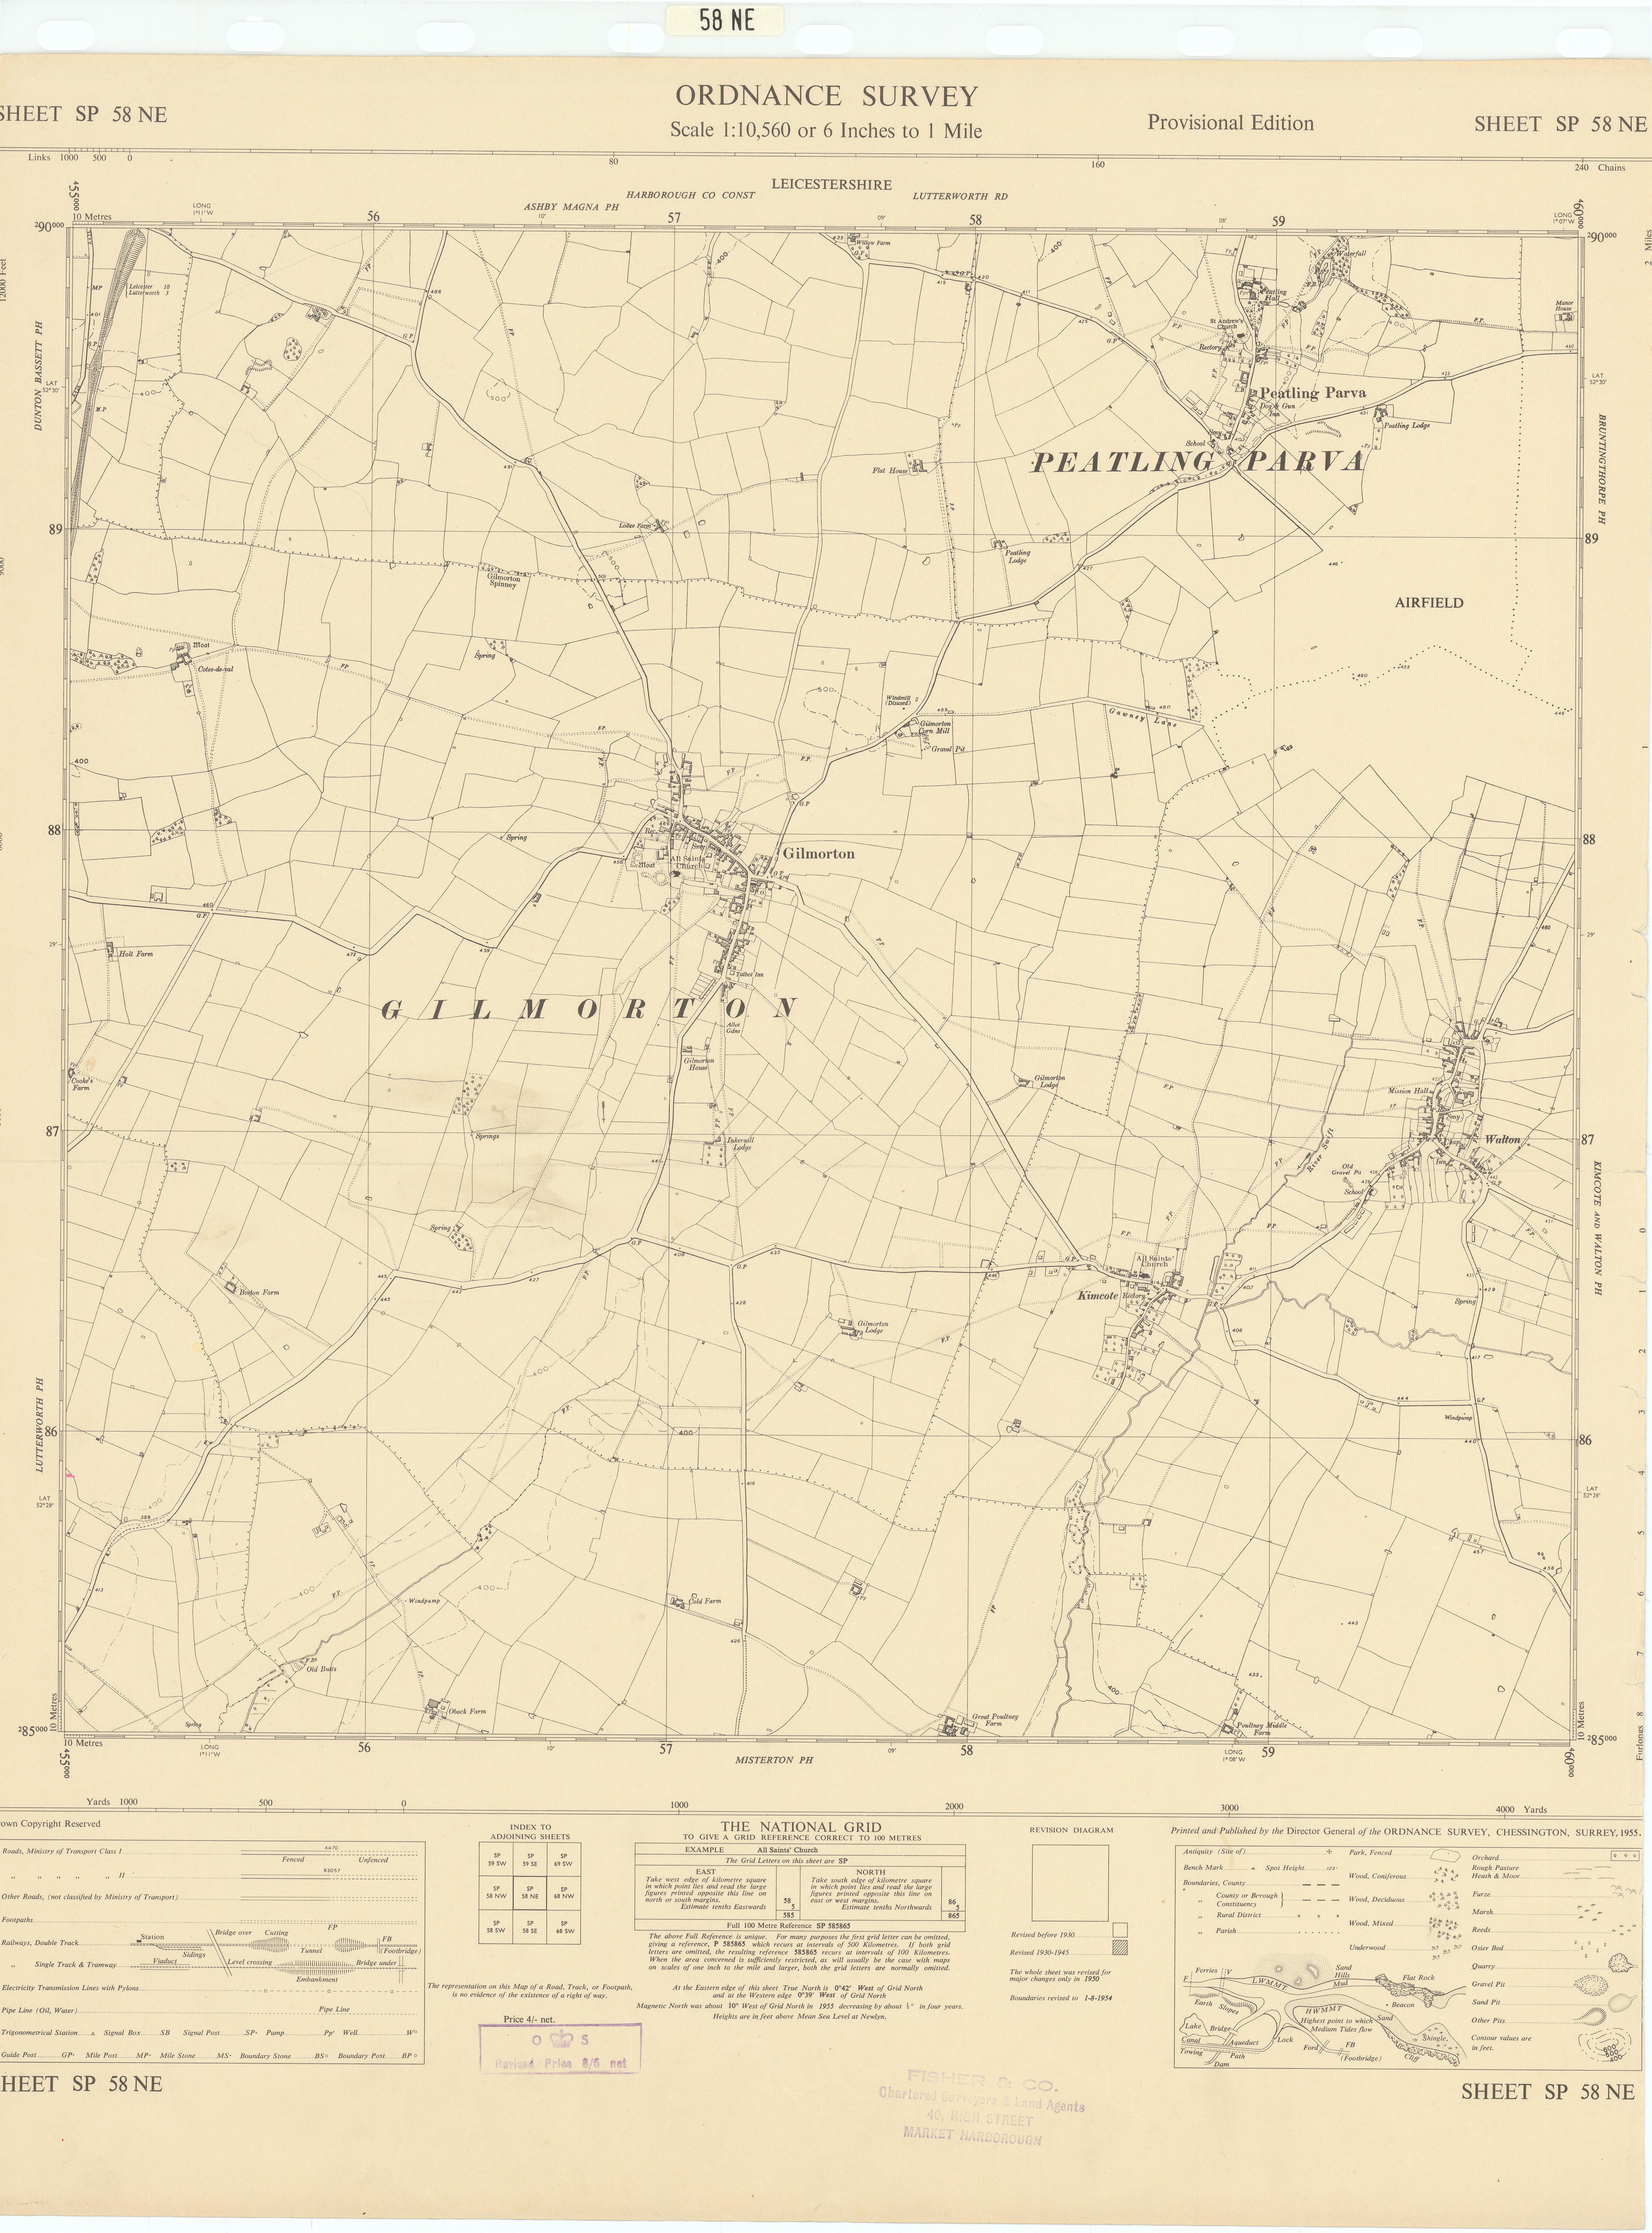 Ordnance Survey SP58NE Leicestershire Gilmorton Walton Peatling Parva 1955 map